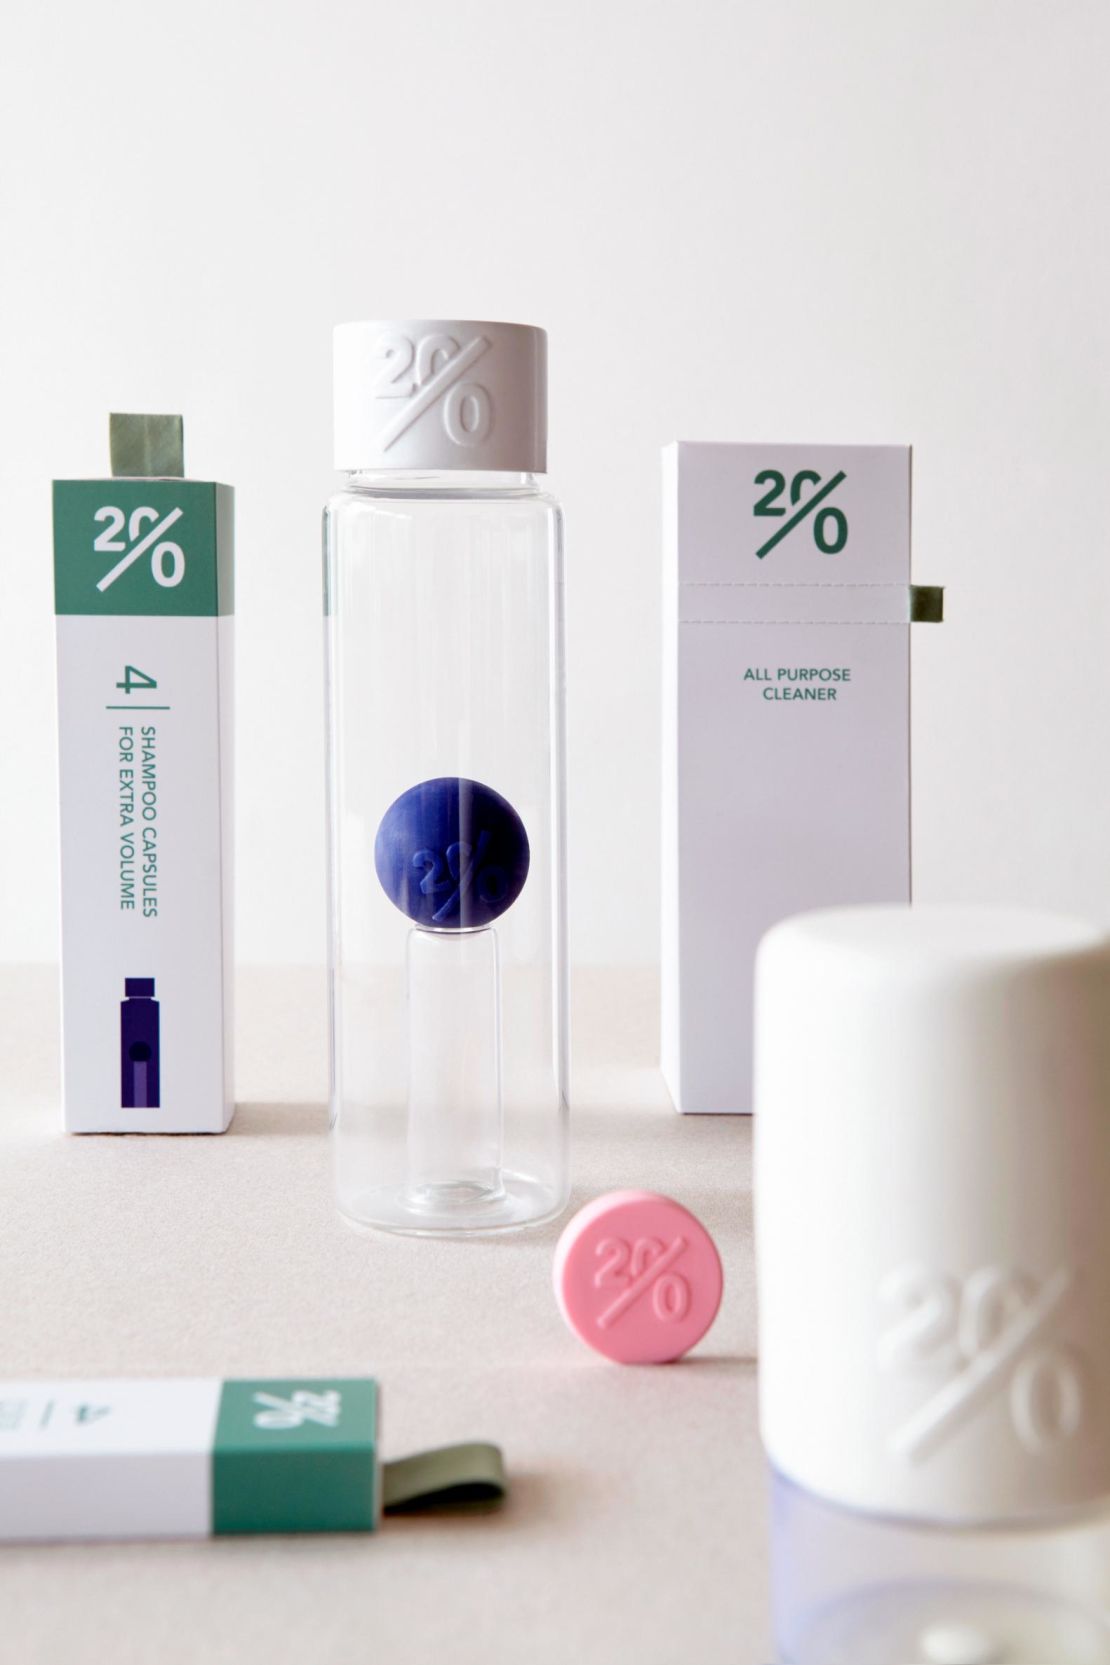 Twenty by Mirjam de Bruijn takes a dehydrated approach to household products.